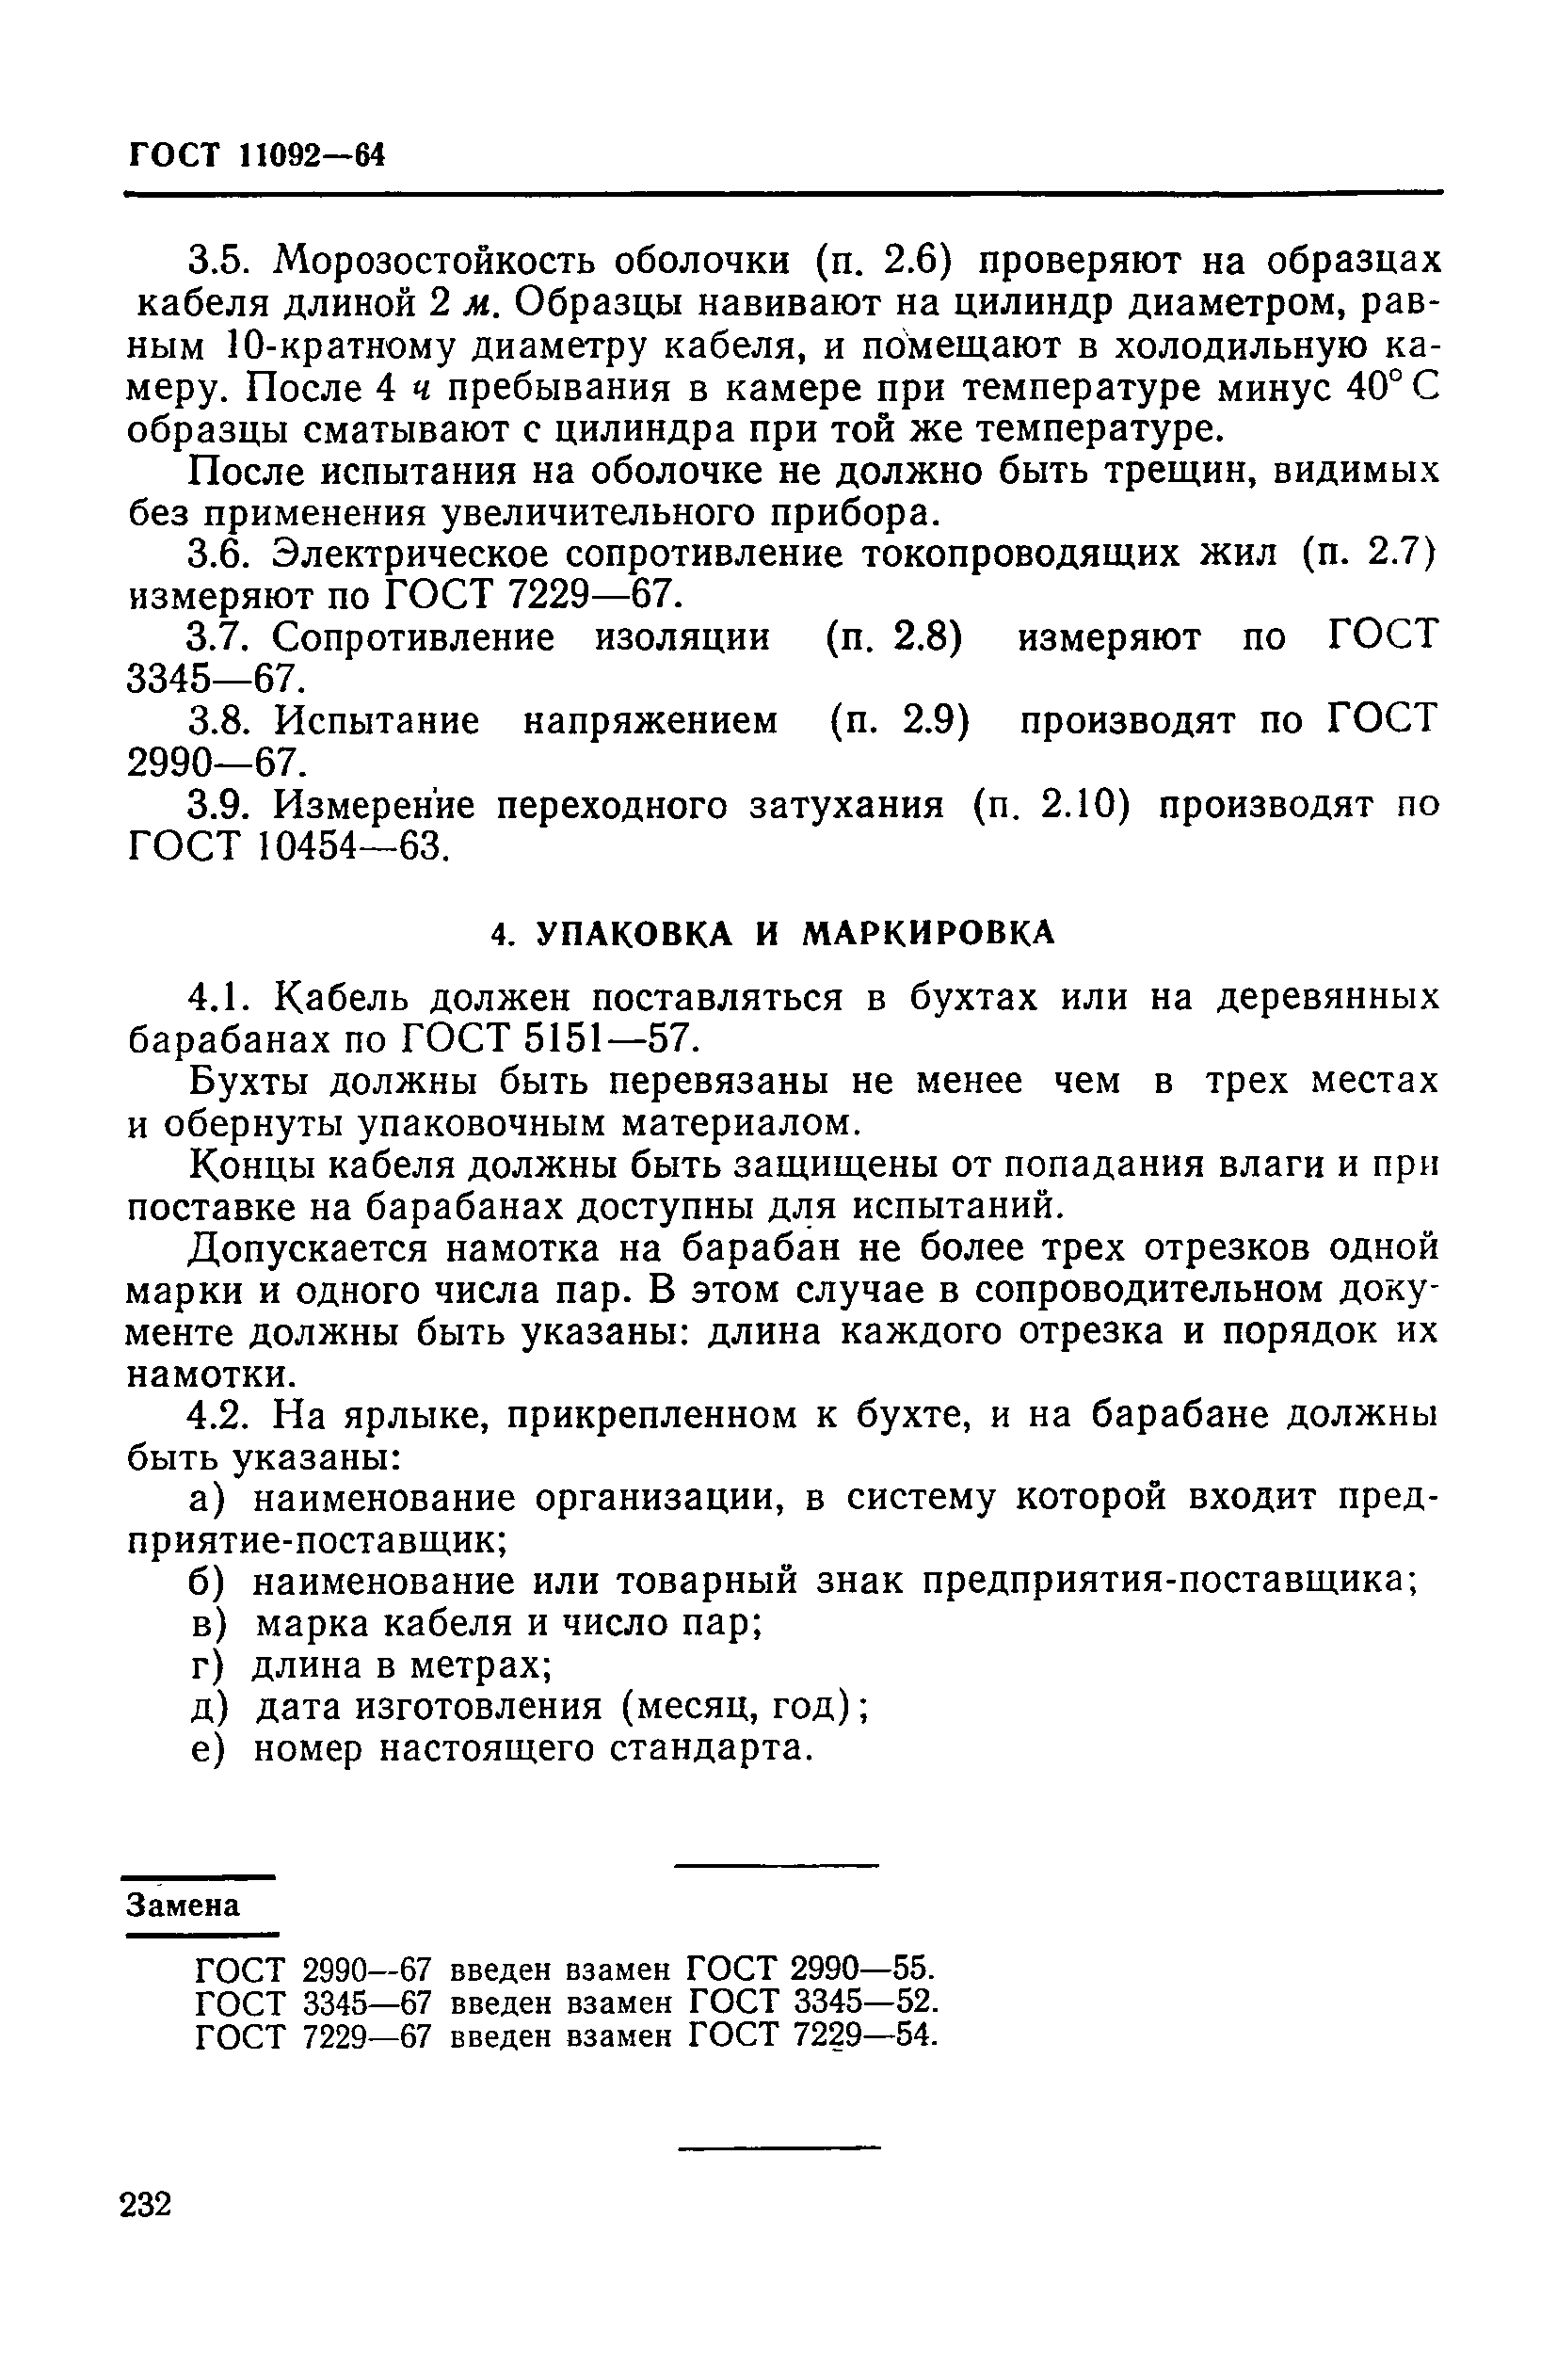 ГОСТ 11092-64